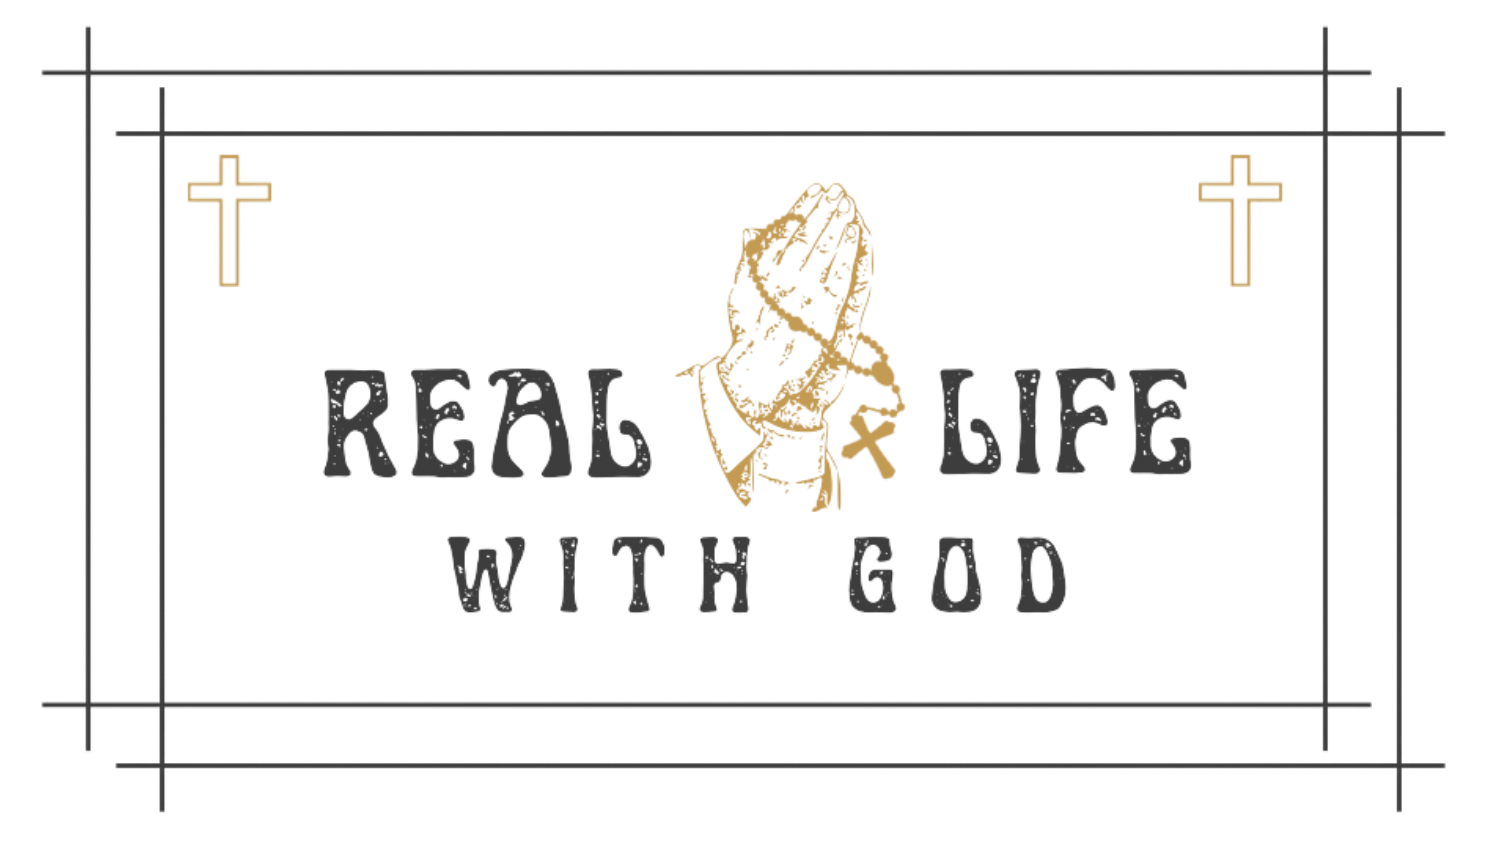 real life with god logo